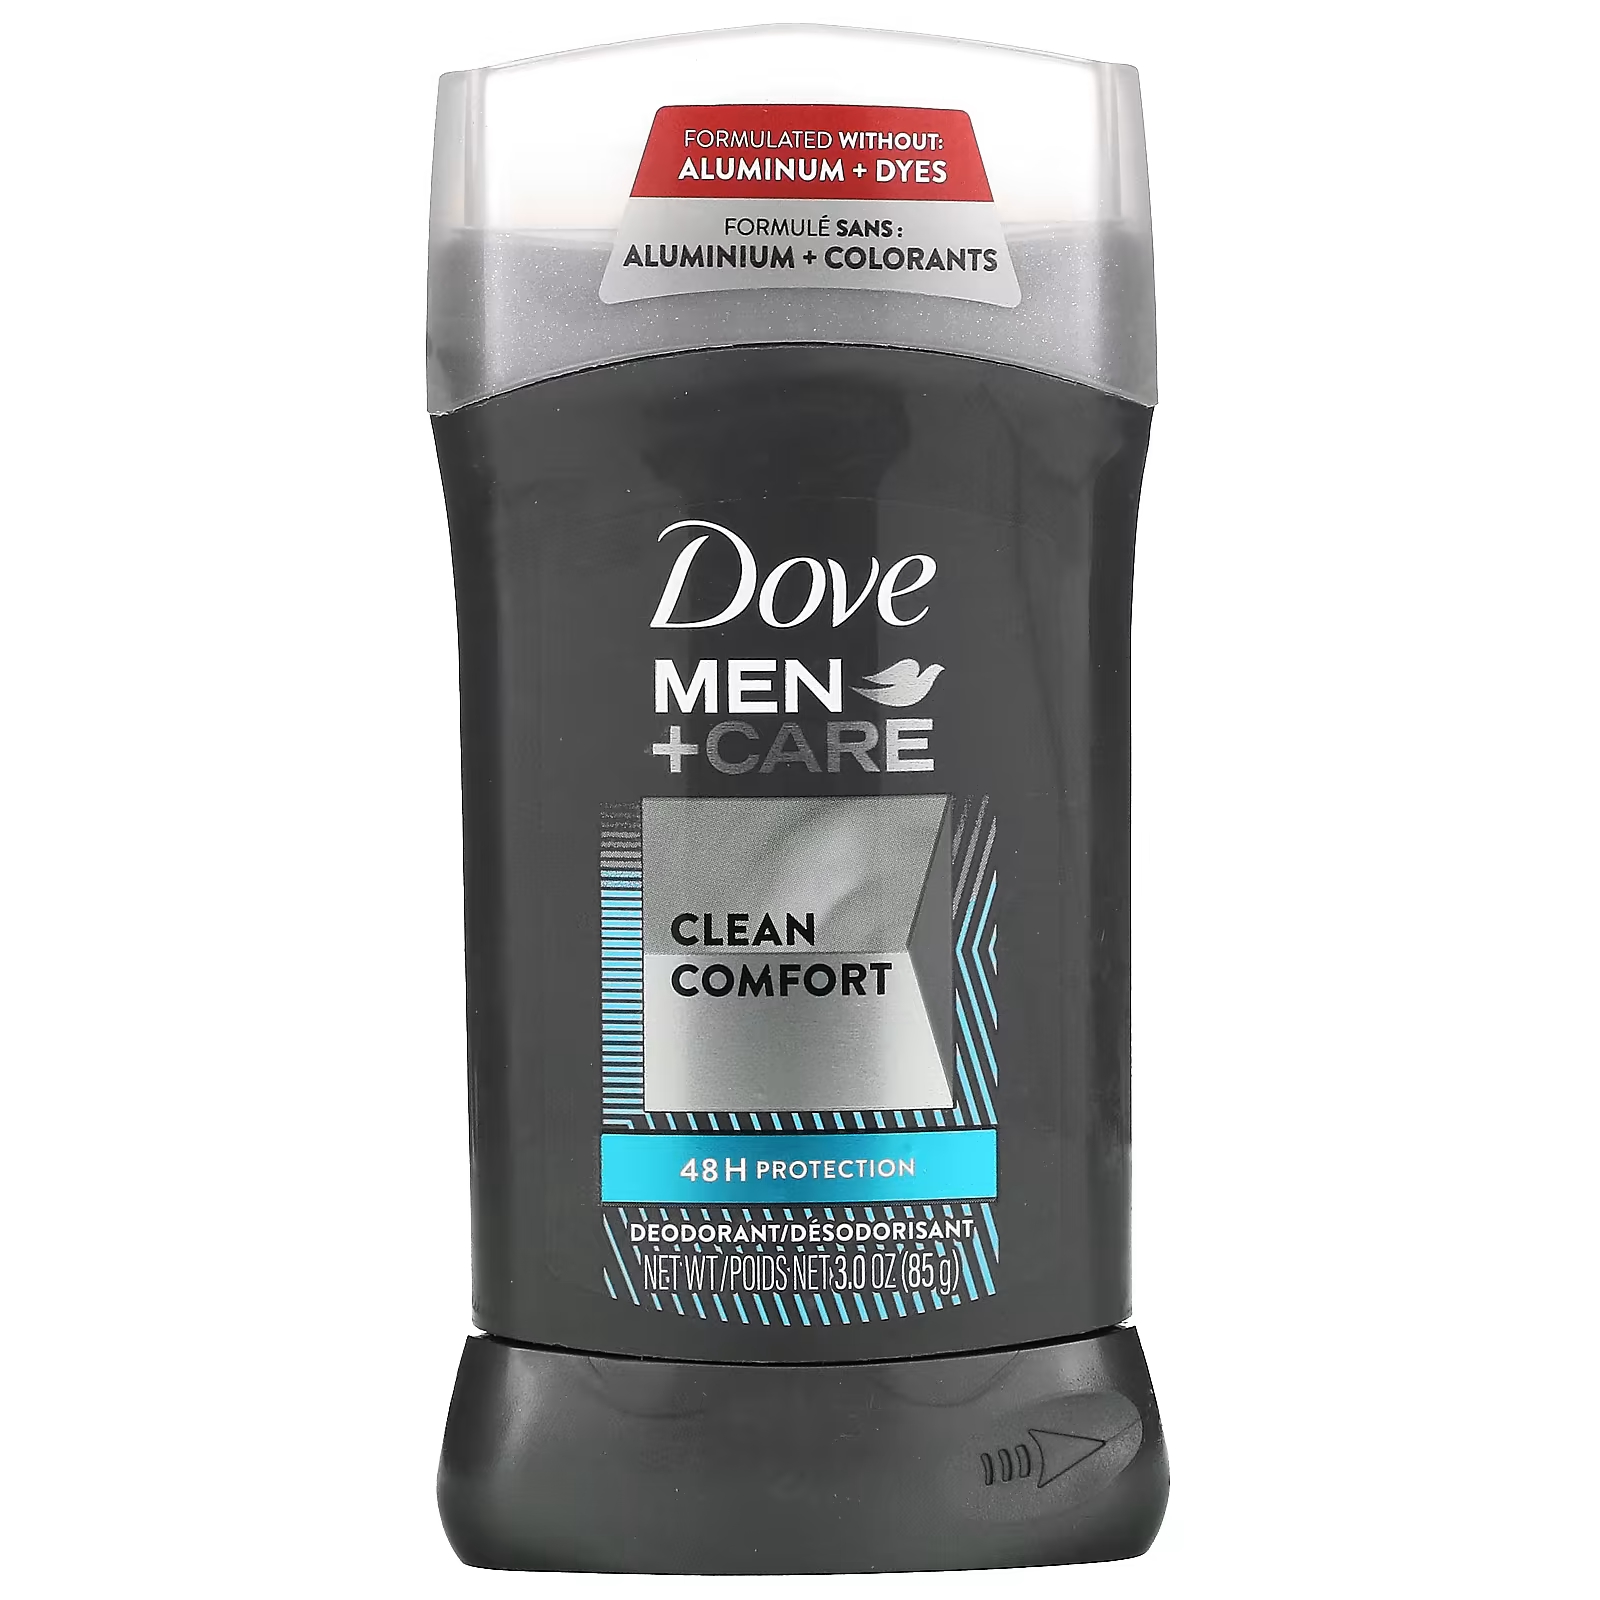 Дезодорант Dove Men + Care Clean Comfort 3 без алюминия, 85 г dove men care дезодорант чистый комфорт 85 г 3 унции